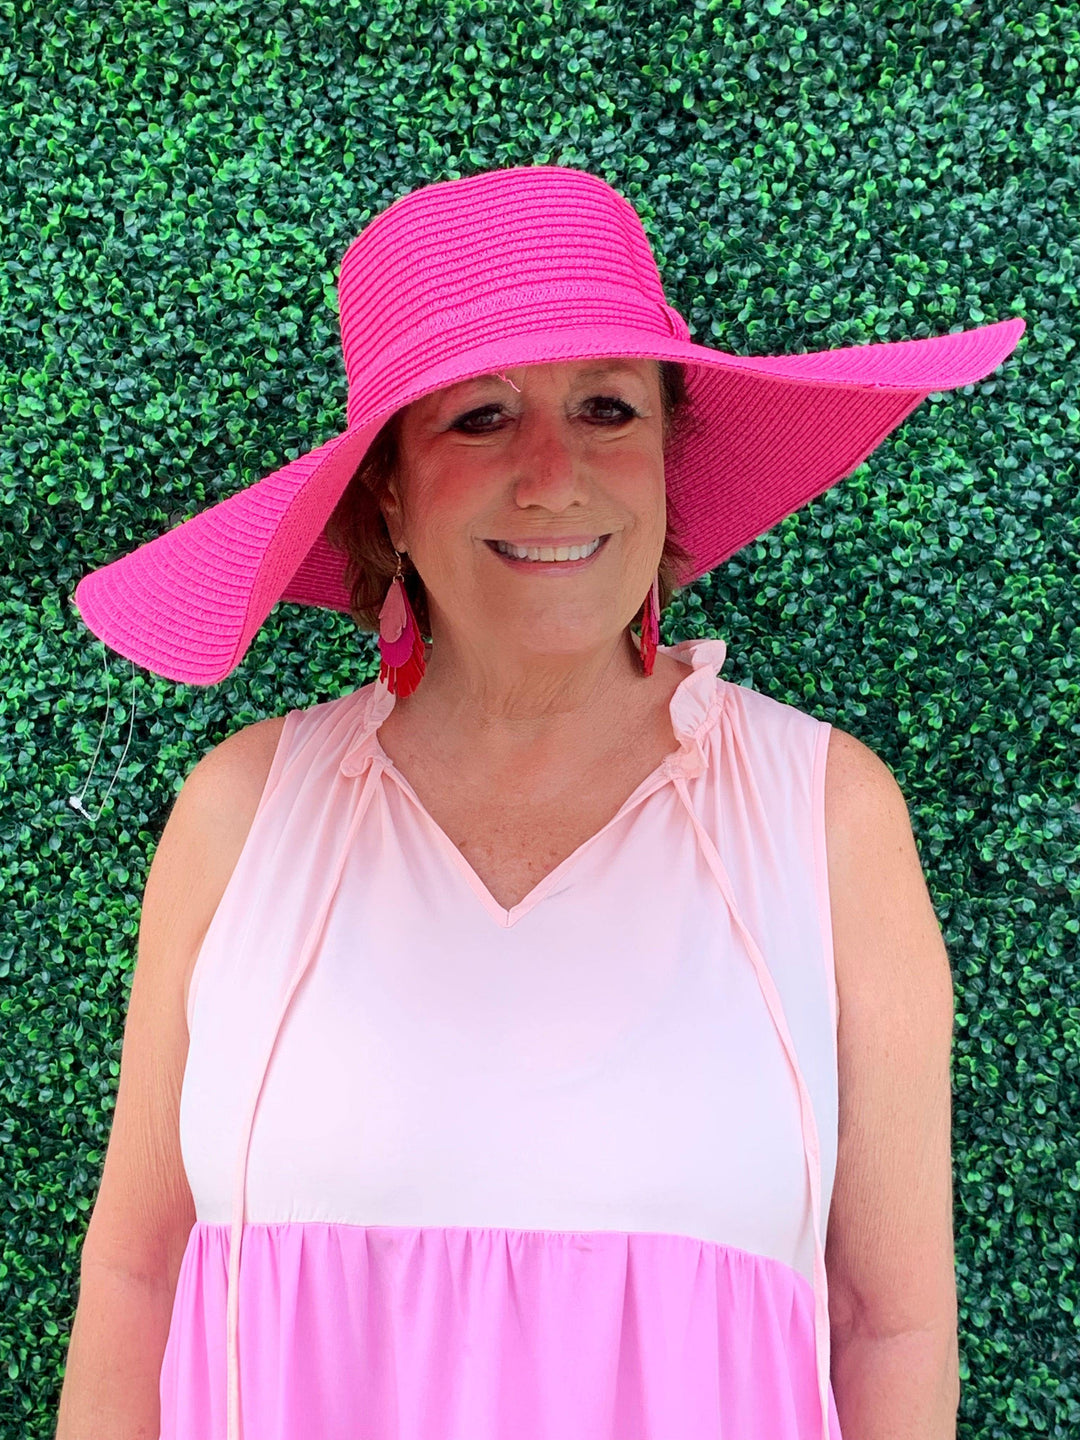 Hot pink sun hat for Houston summer